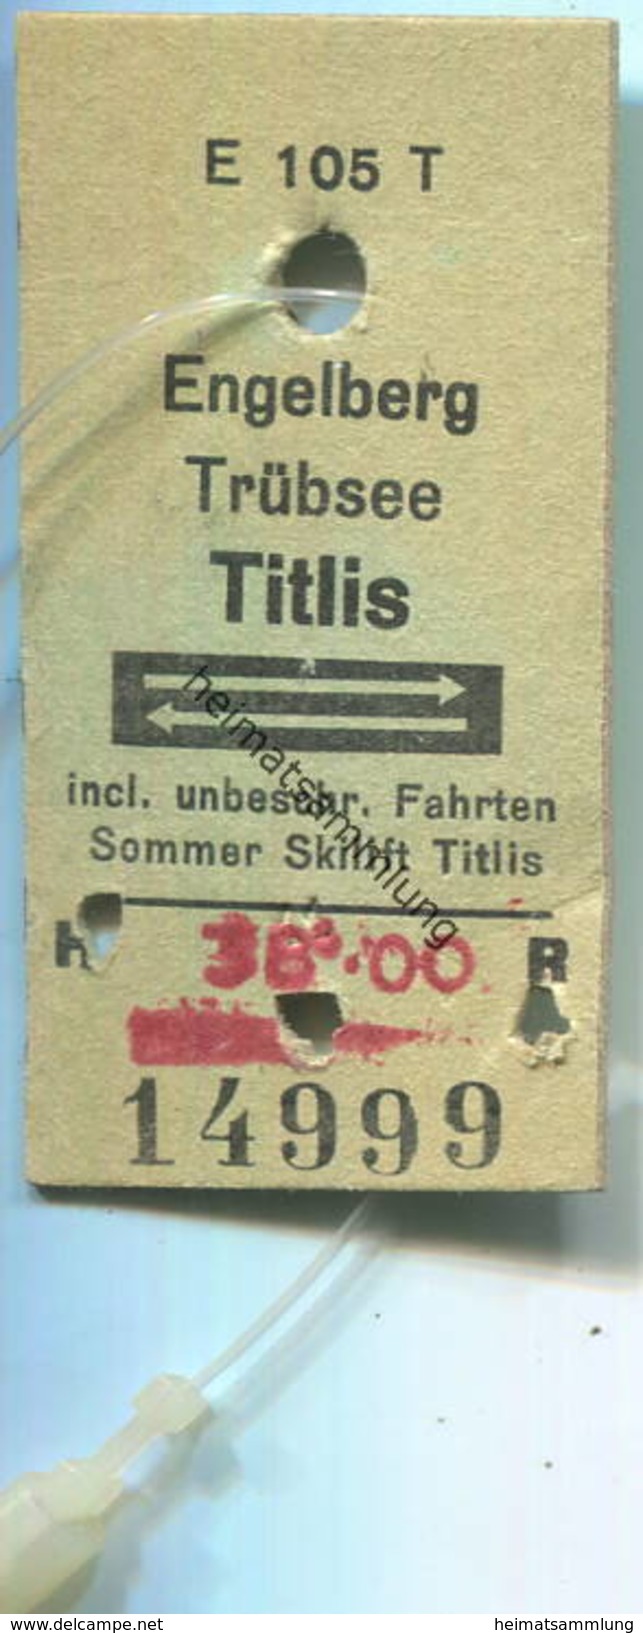 Schweiz - Engelberg - Trübsee Titlis - Inkl. Sommer Skilift Titlis 1980 - Europa